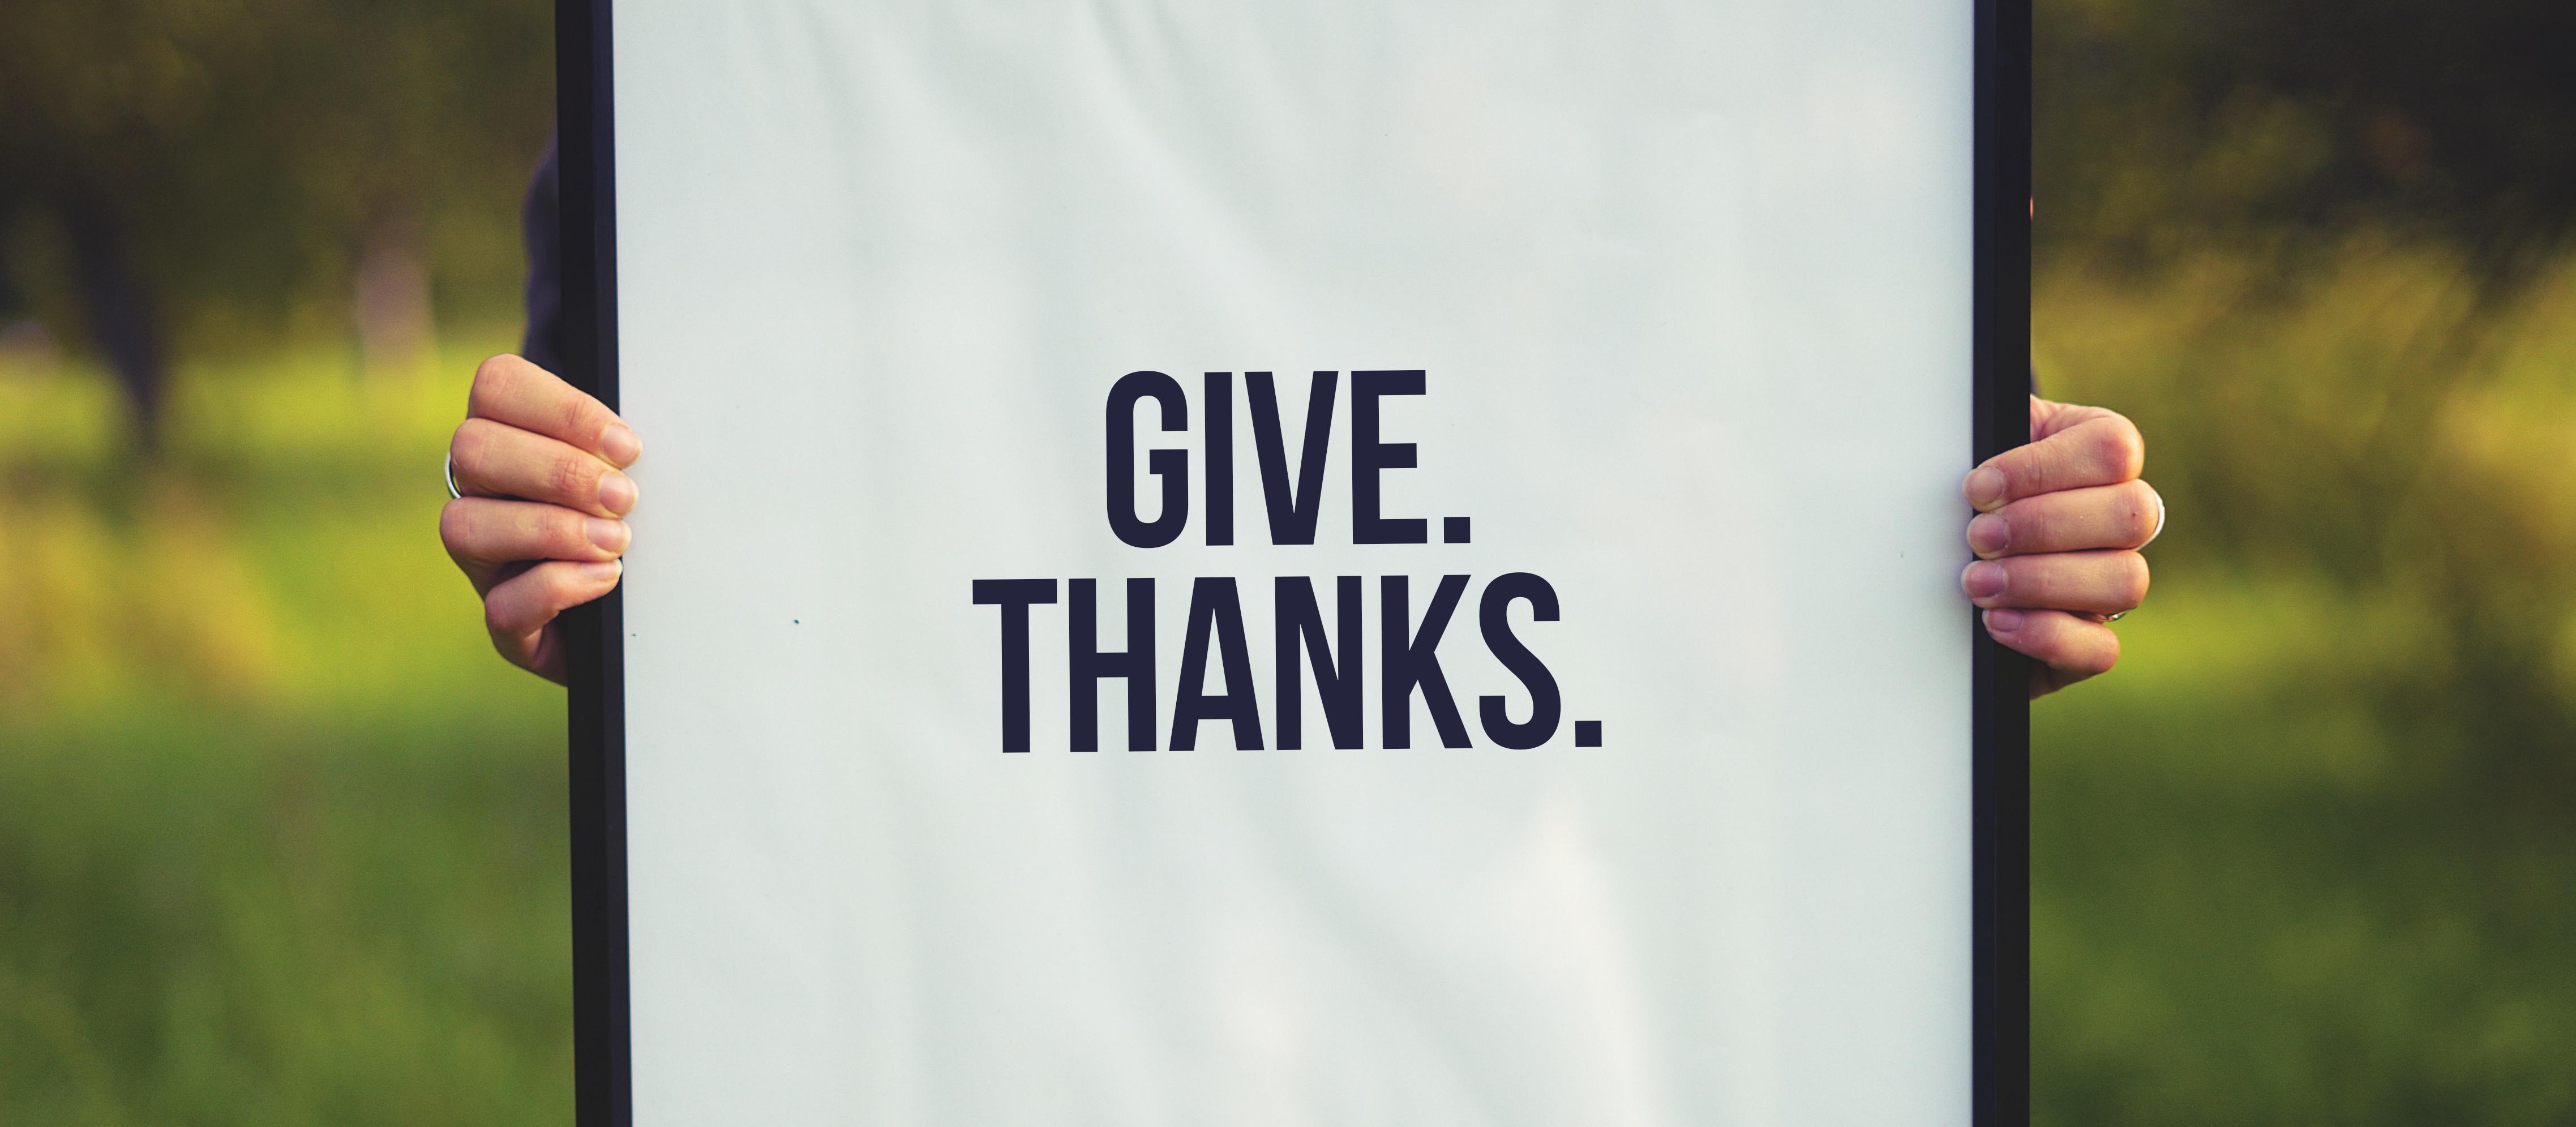 Give thanks. Photo Simon Maage - unsplash.com